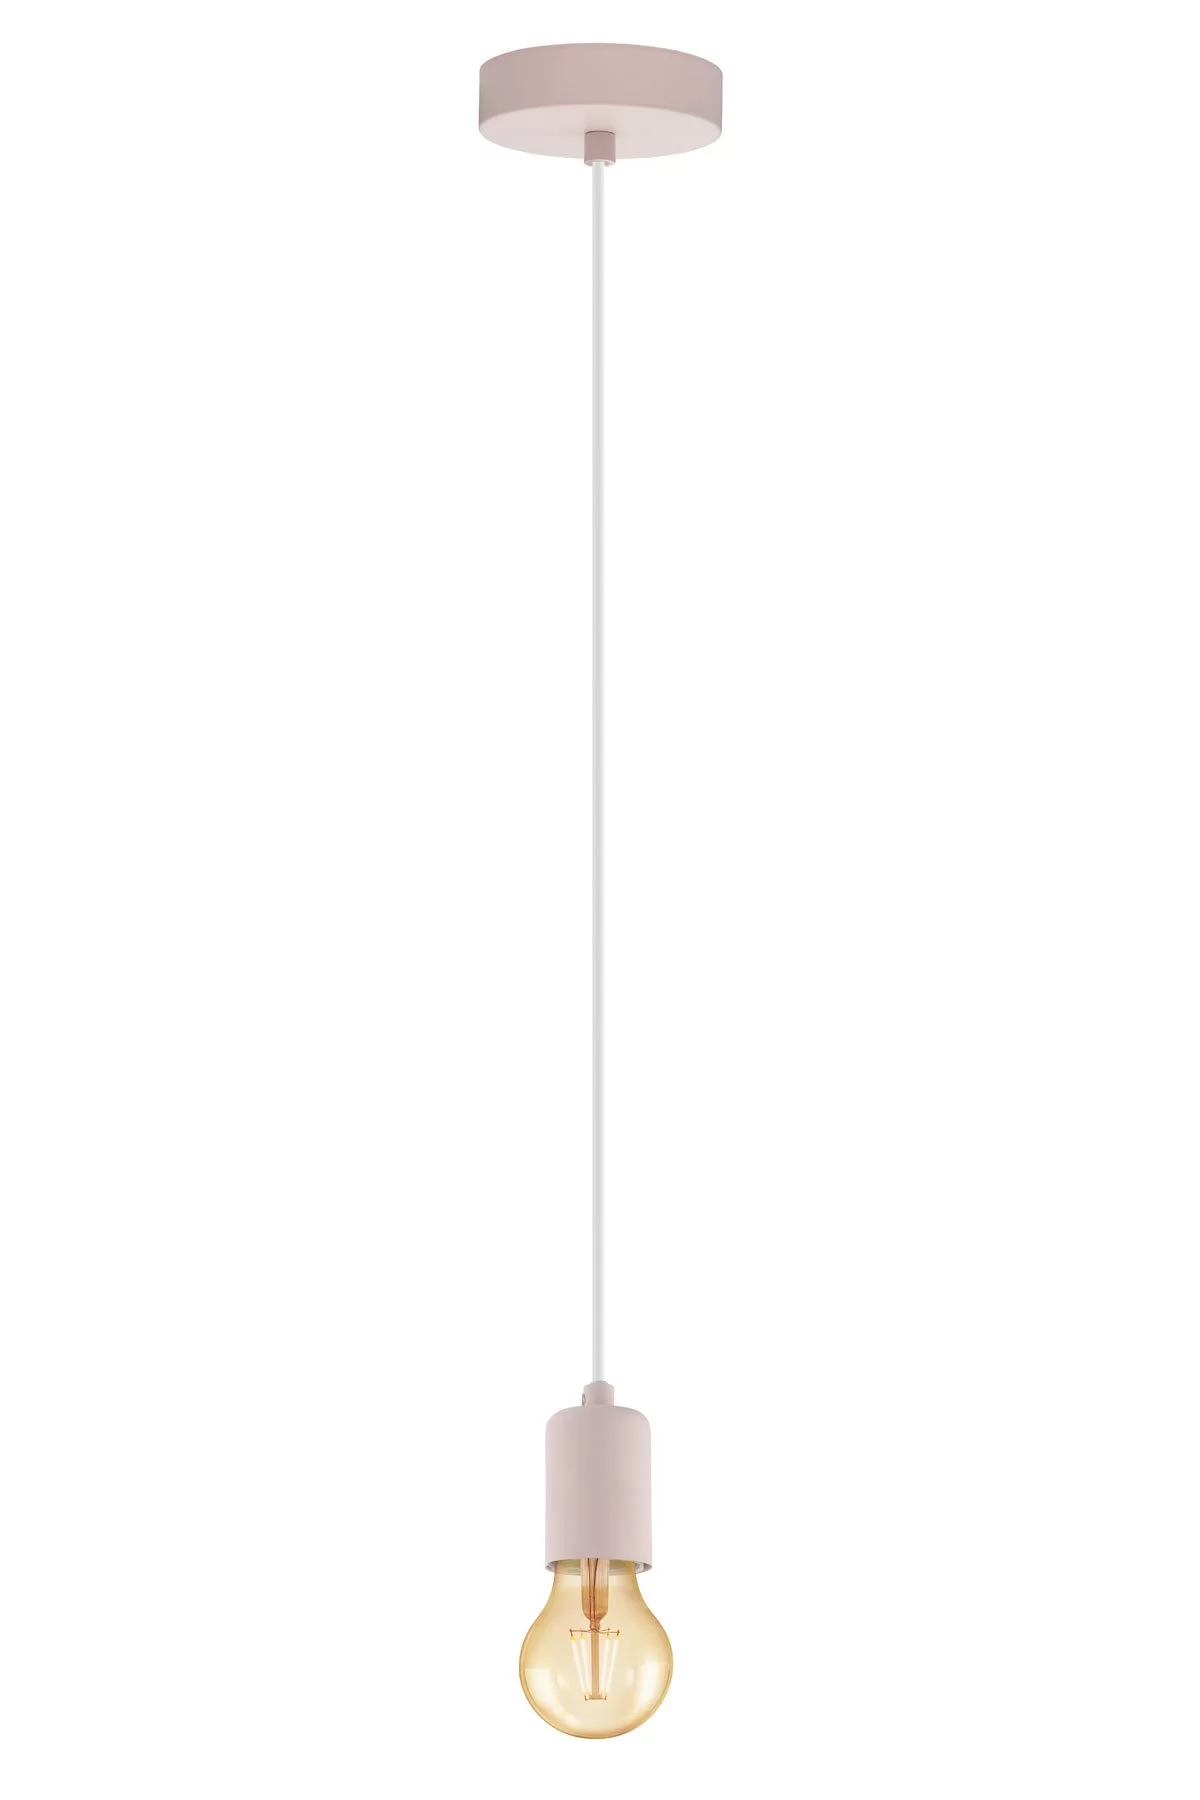   
                        
                        Люстра EGLO (Австрия) 12818    
                         в стиле Лофт, Скандинавский.  
                        Тип источника света: светодиодная лампа, сменная.                         Форма: Круг.                                                                          фото 1